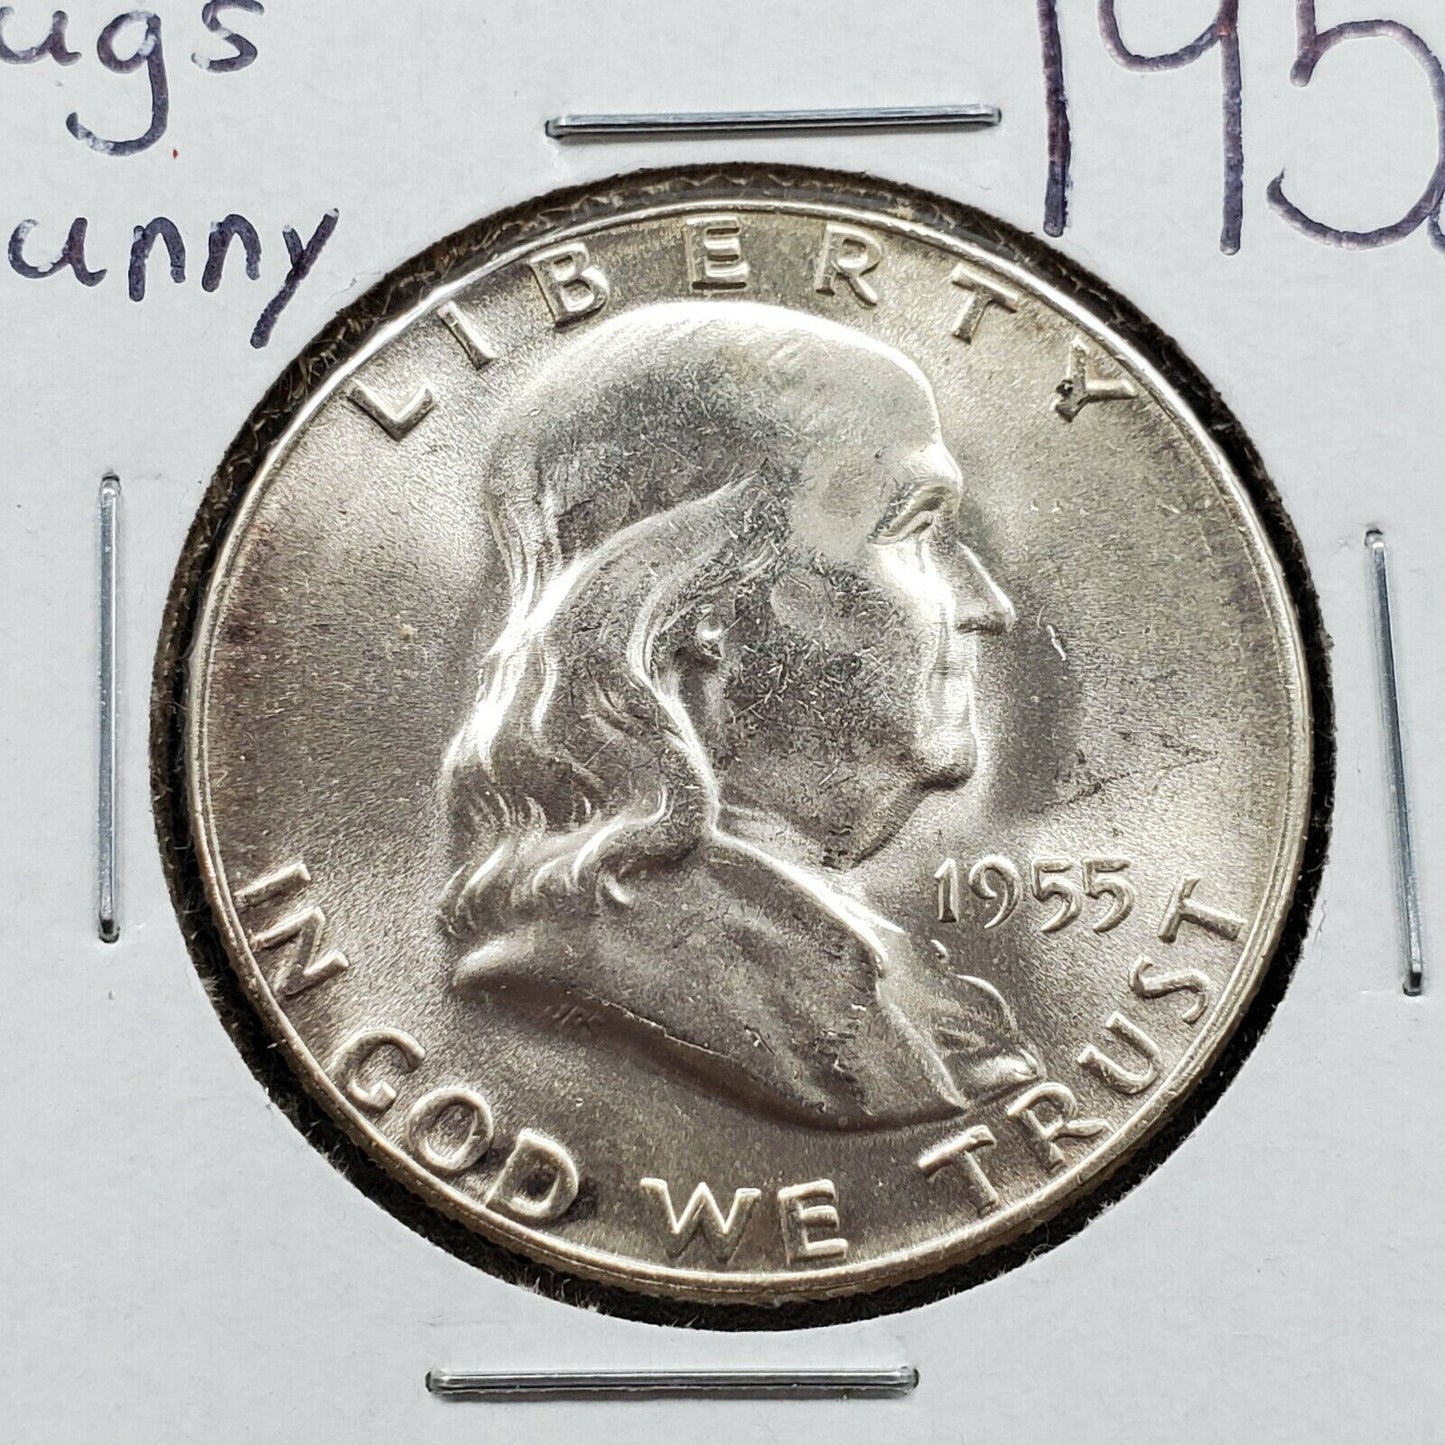 1955 Franklin Silver Half Dollar Coin Bugs Bunny Variety FS-401 CHOICE BU UNC